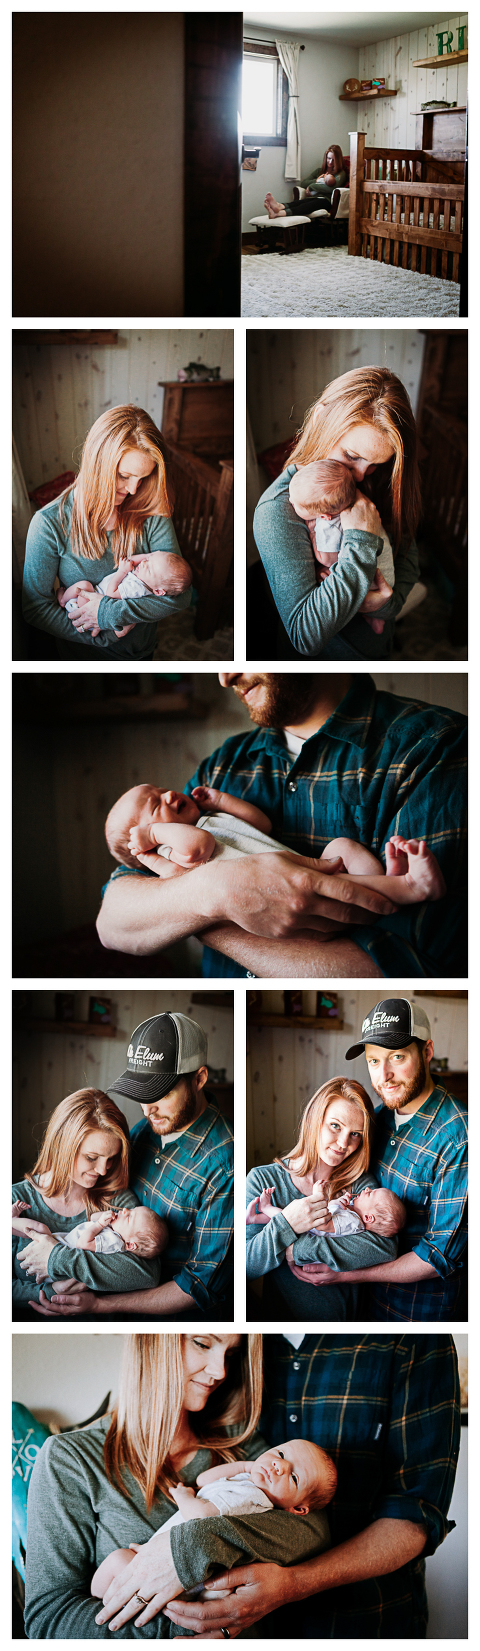 Baby Riggs, lifestyle newborn photography by Hailey Haberman in Ellensburg WA